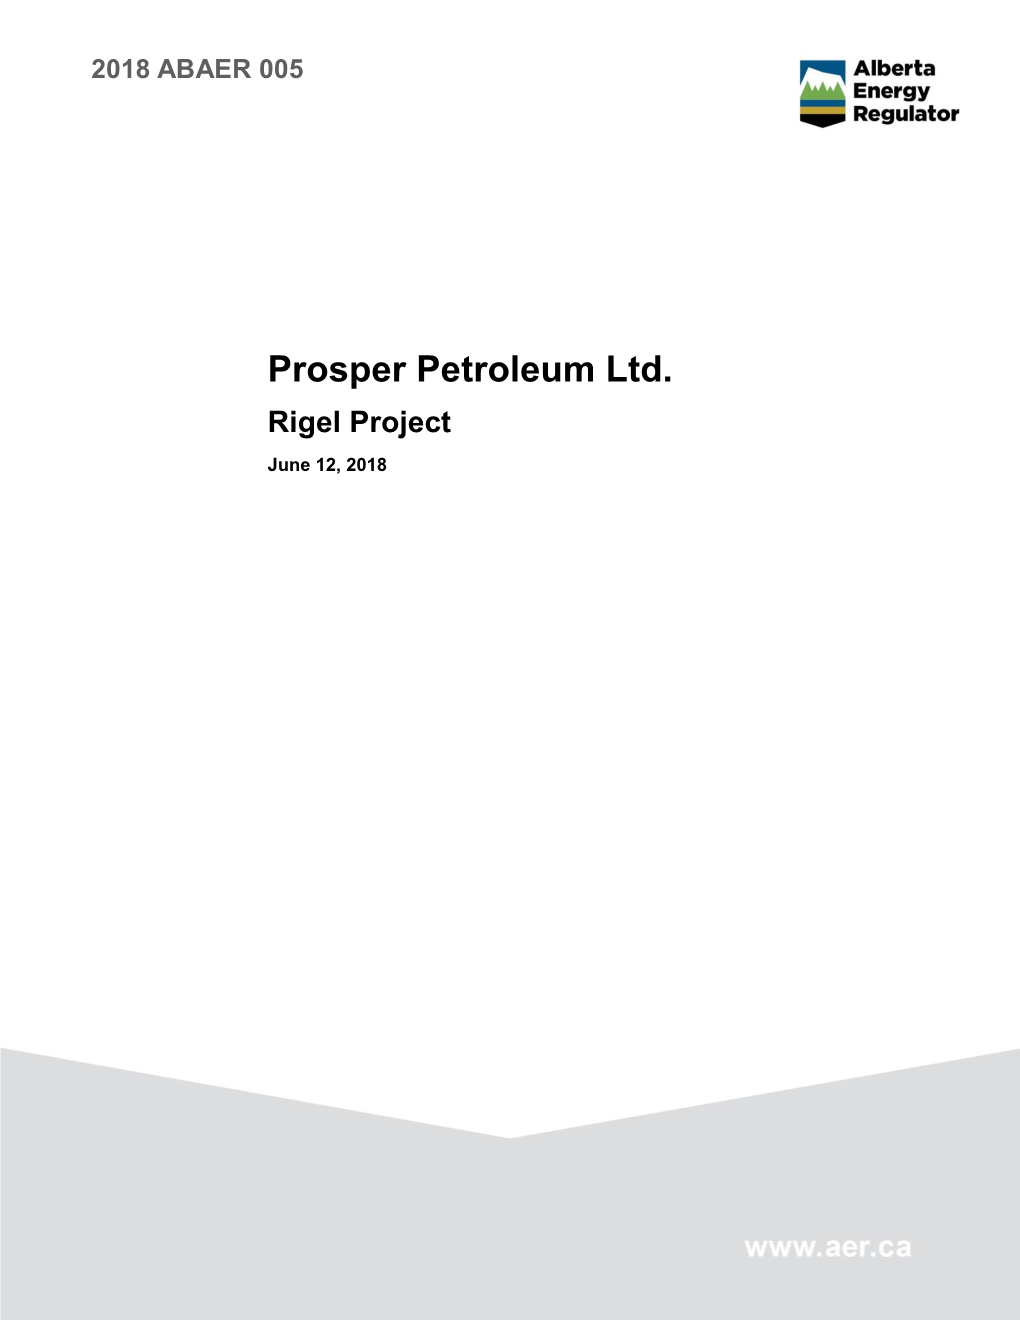 Prosper Petroleum Ltd